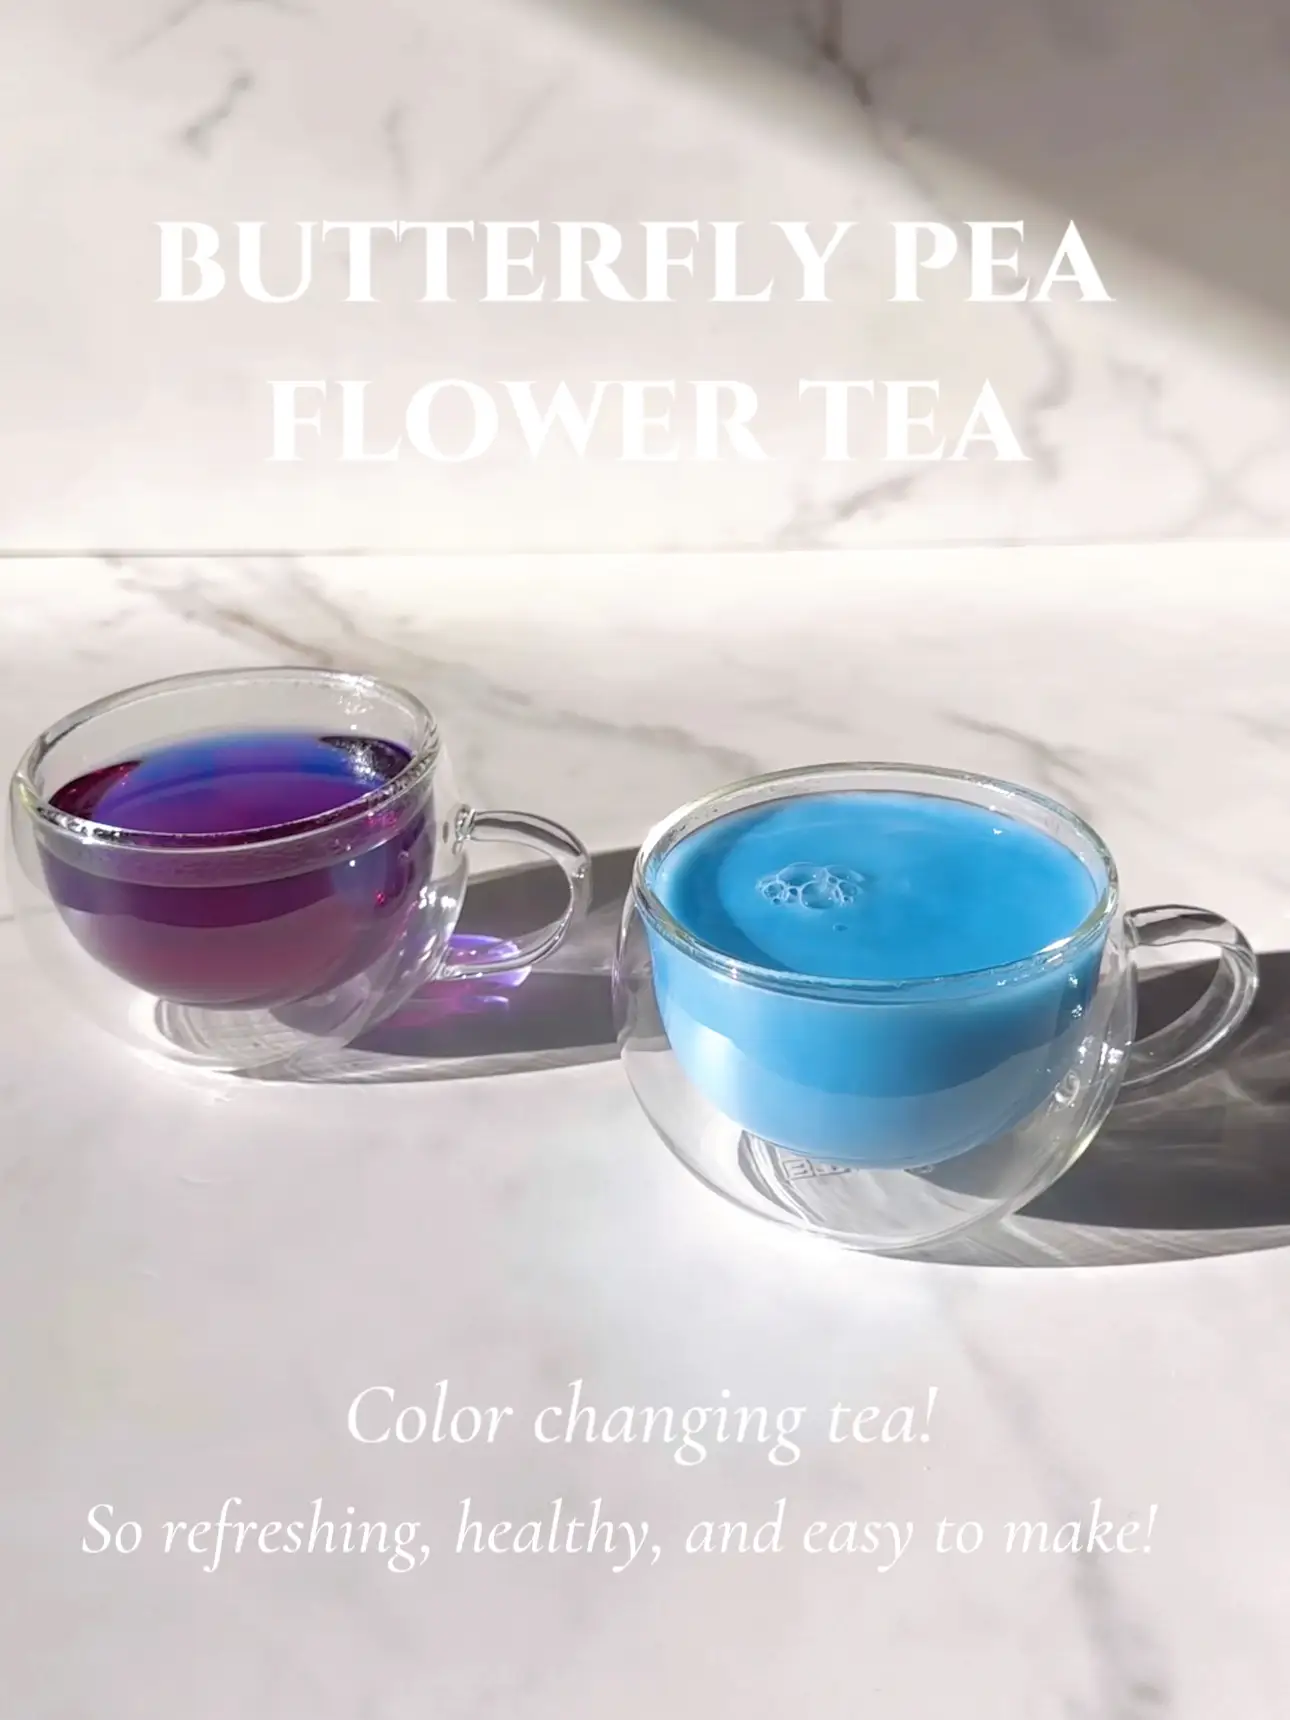 Blue Tea (butterfly pea flower tea) - My Foodcourt